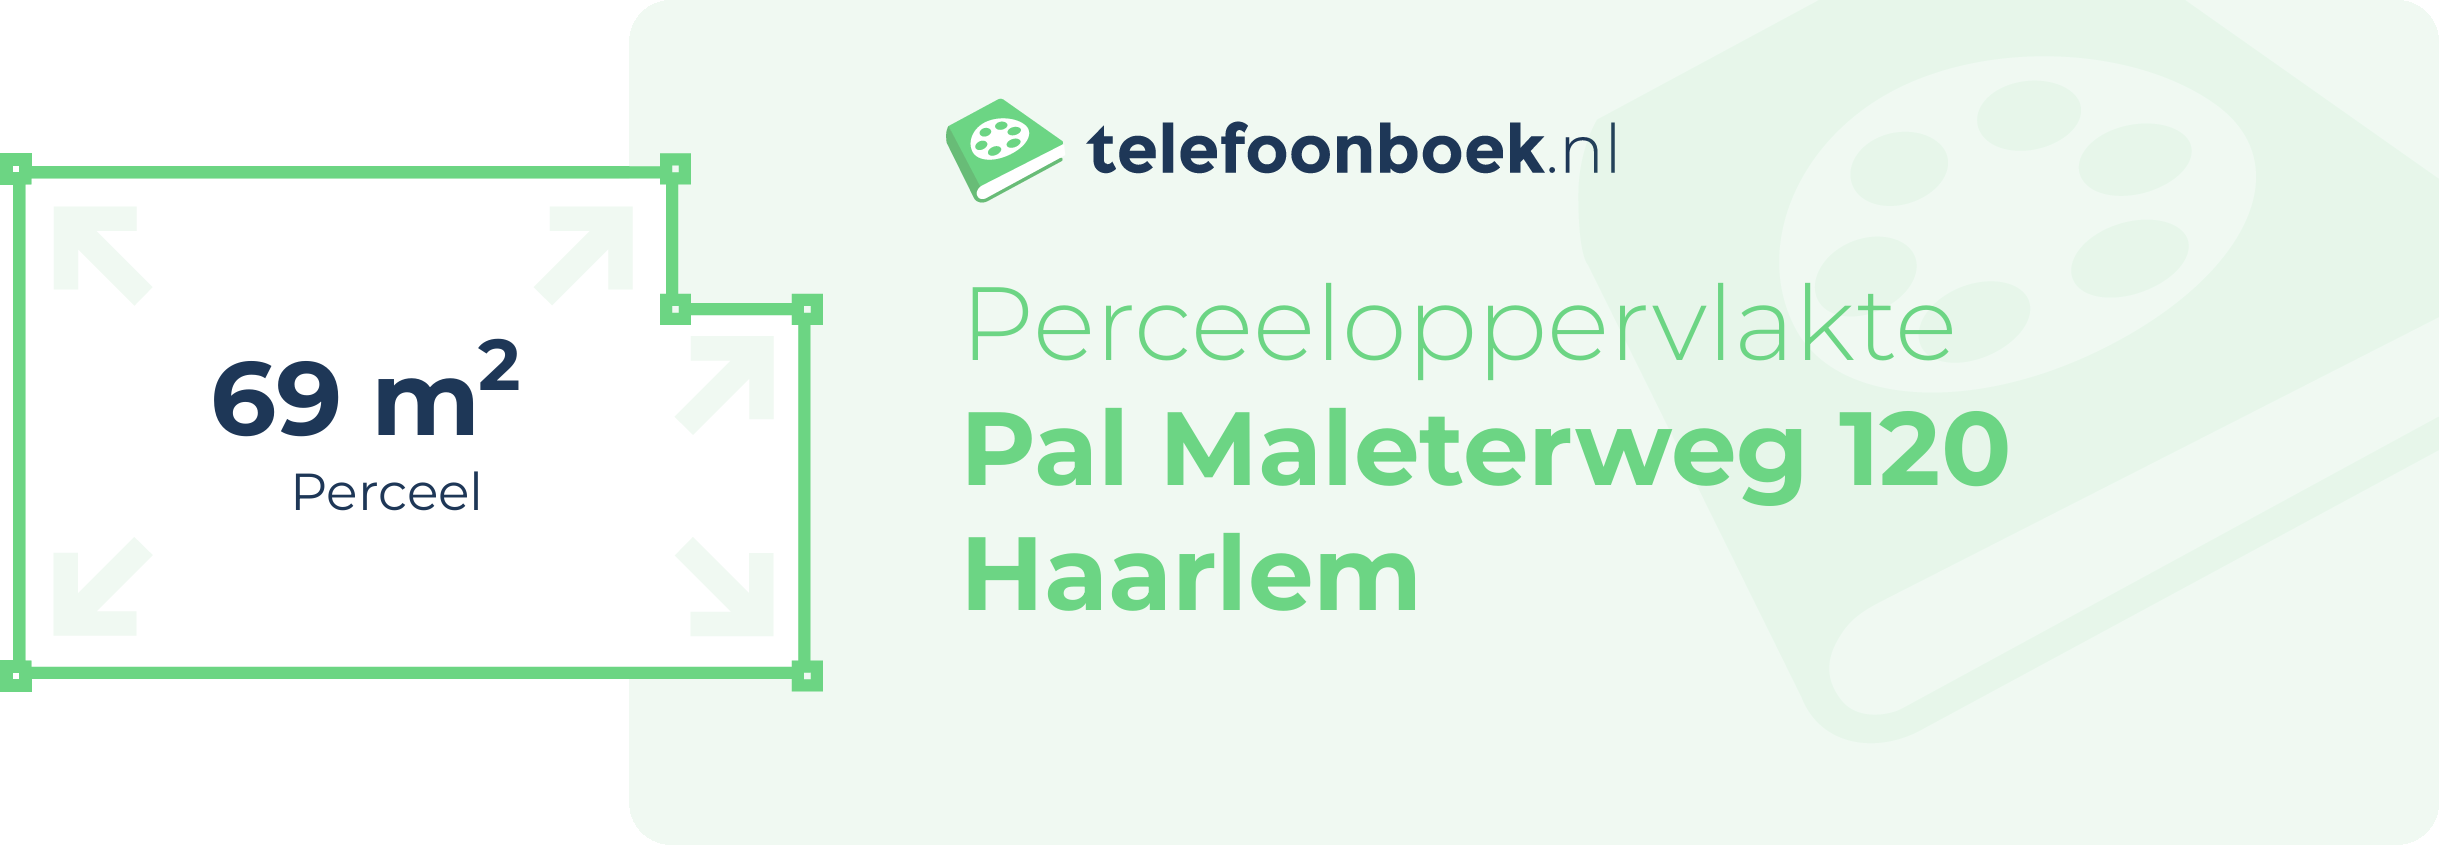 Perceeloppervlakte Pal Maleterweg 120 Haarlem